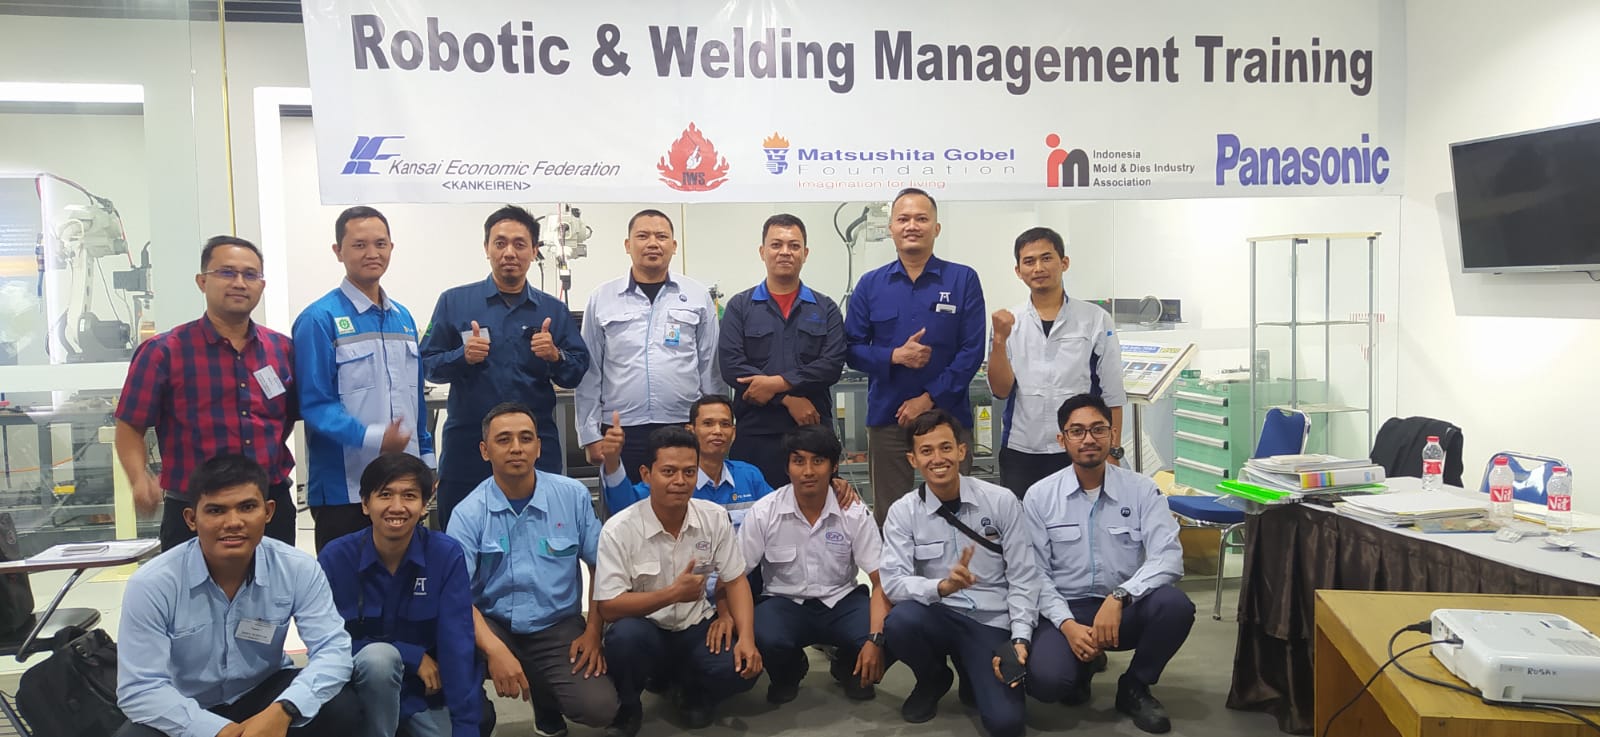 Robotic & Welding Management Training